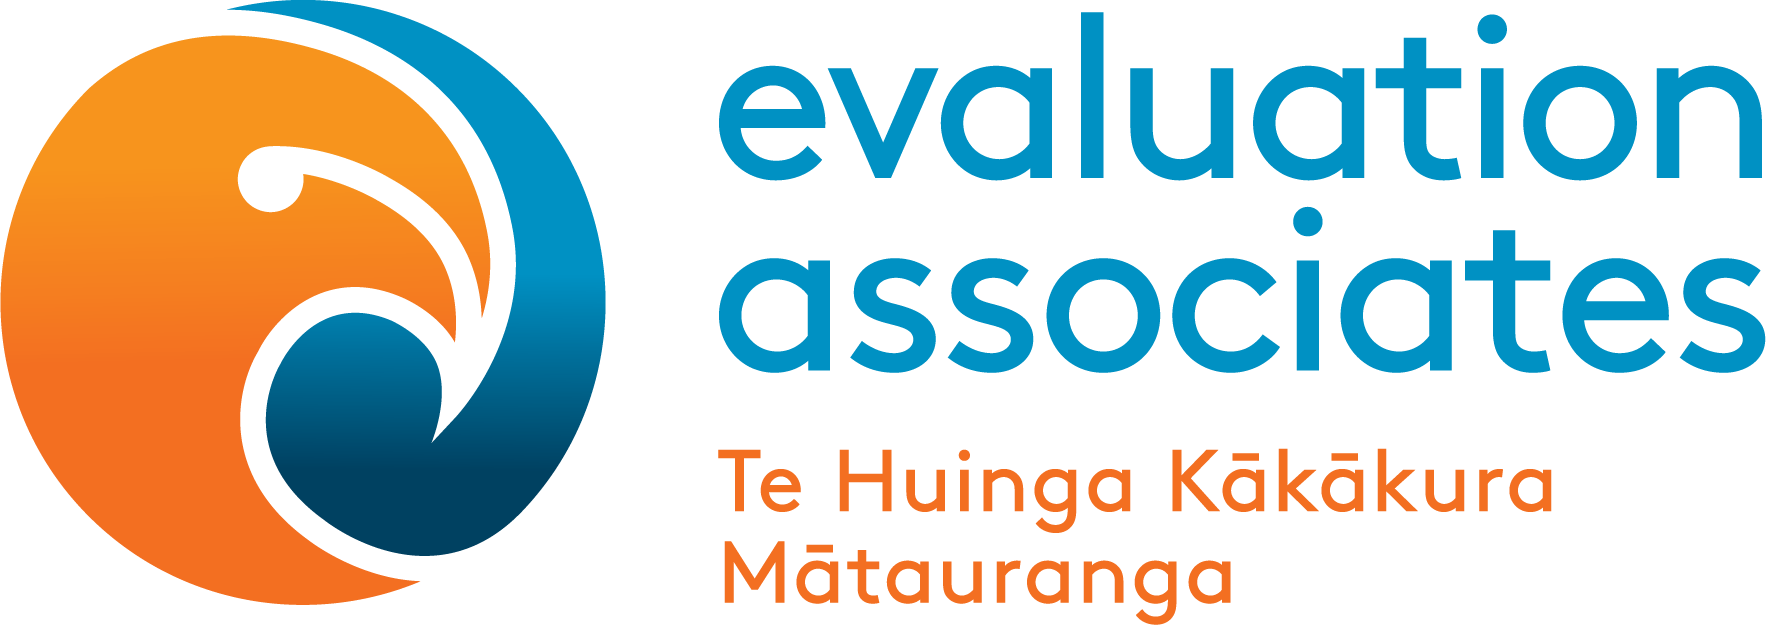 Evaluation Associates logo Andrea Blower